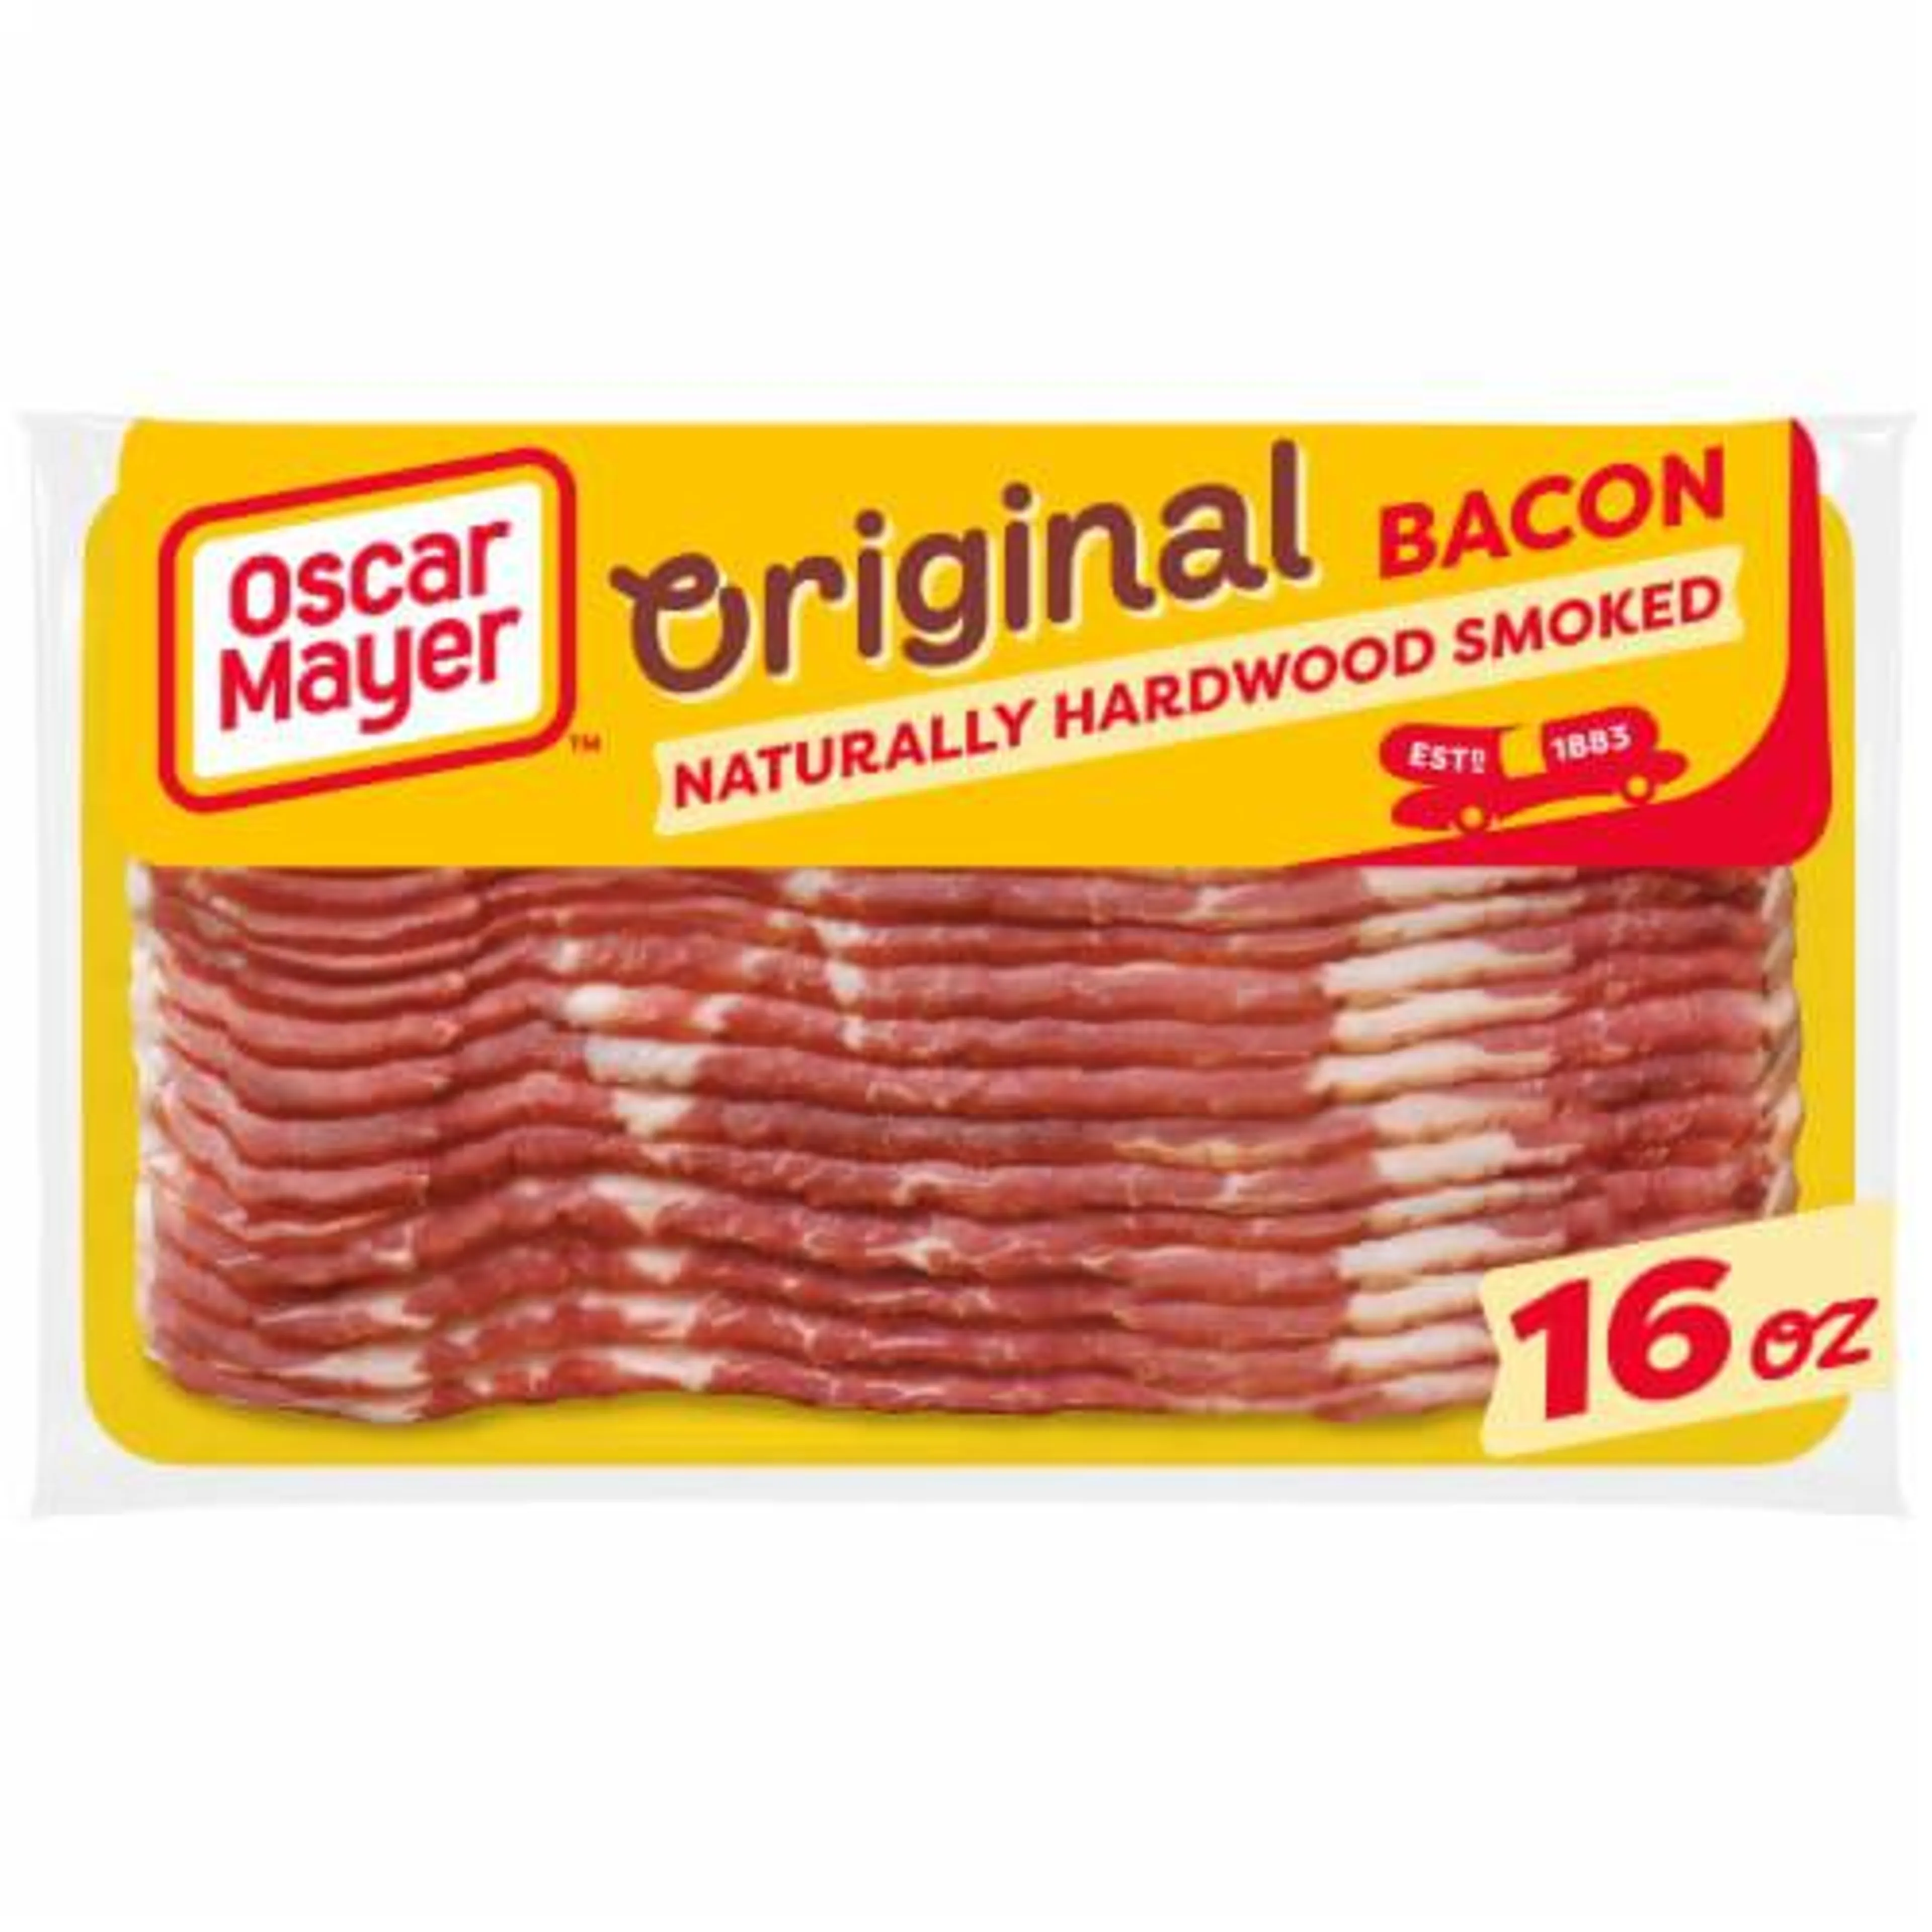 Oscar Mayer Naturally Smoked for 12 Hours Bacon